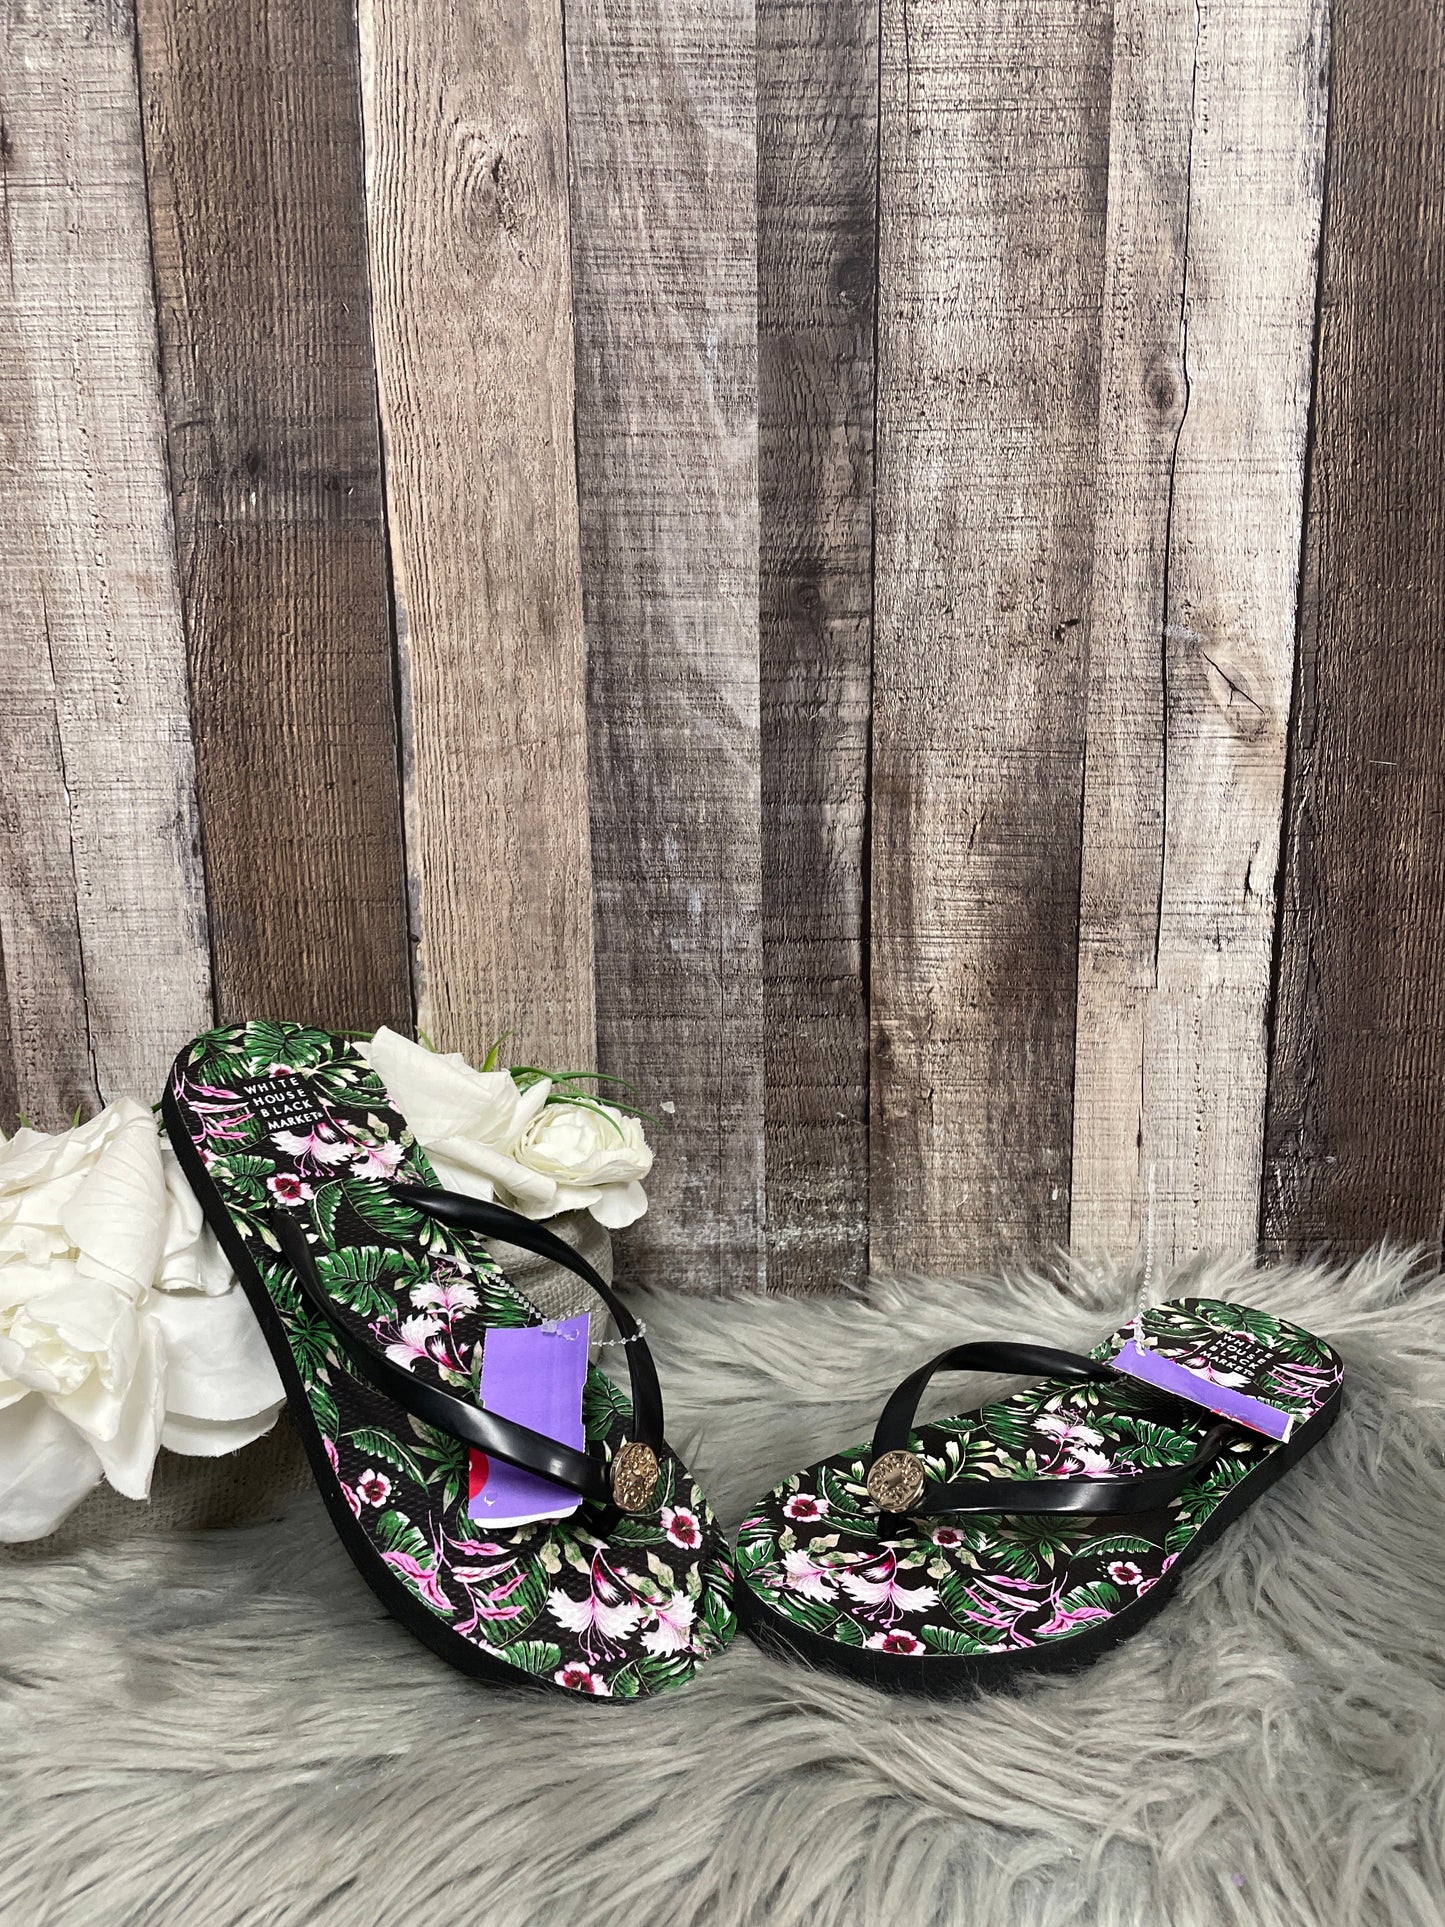 Floral Print Sandals Flip Flops White House Black Market, Size 9